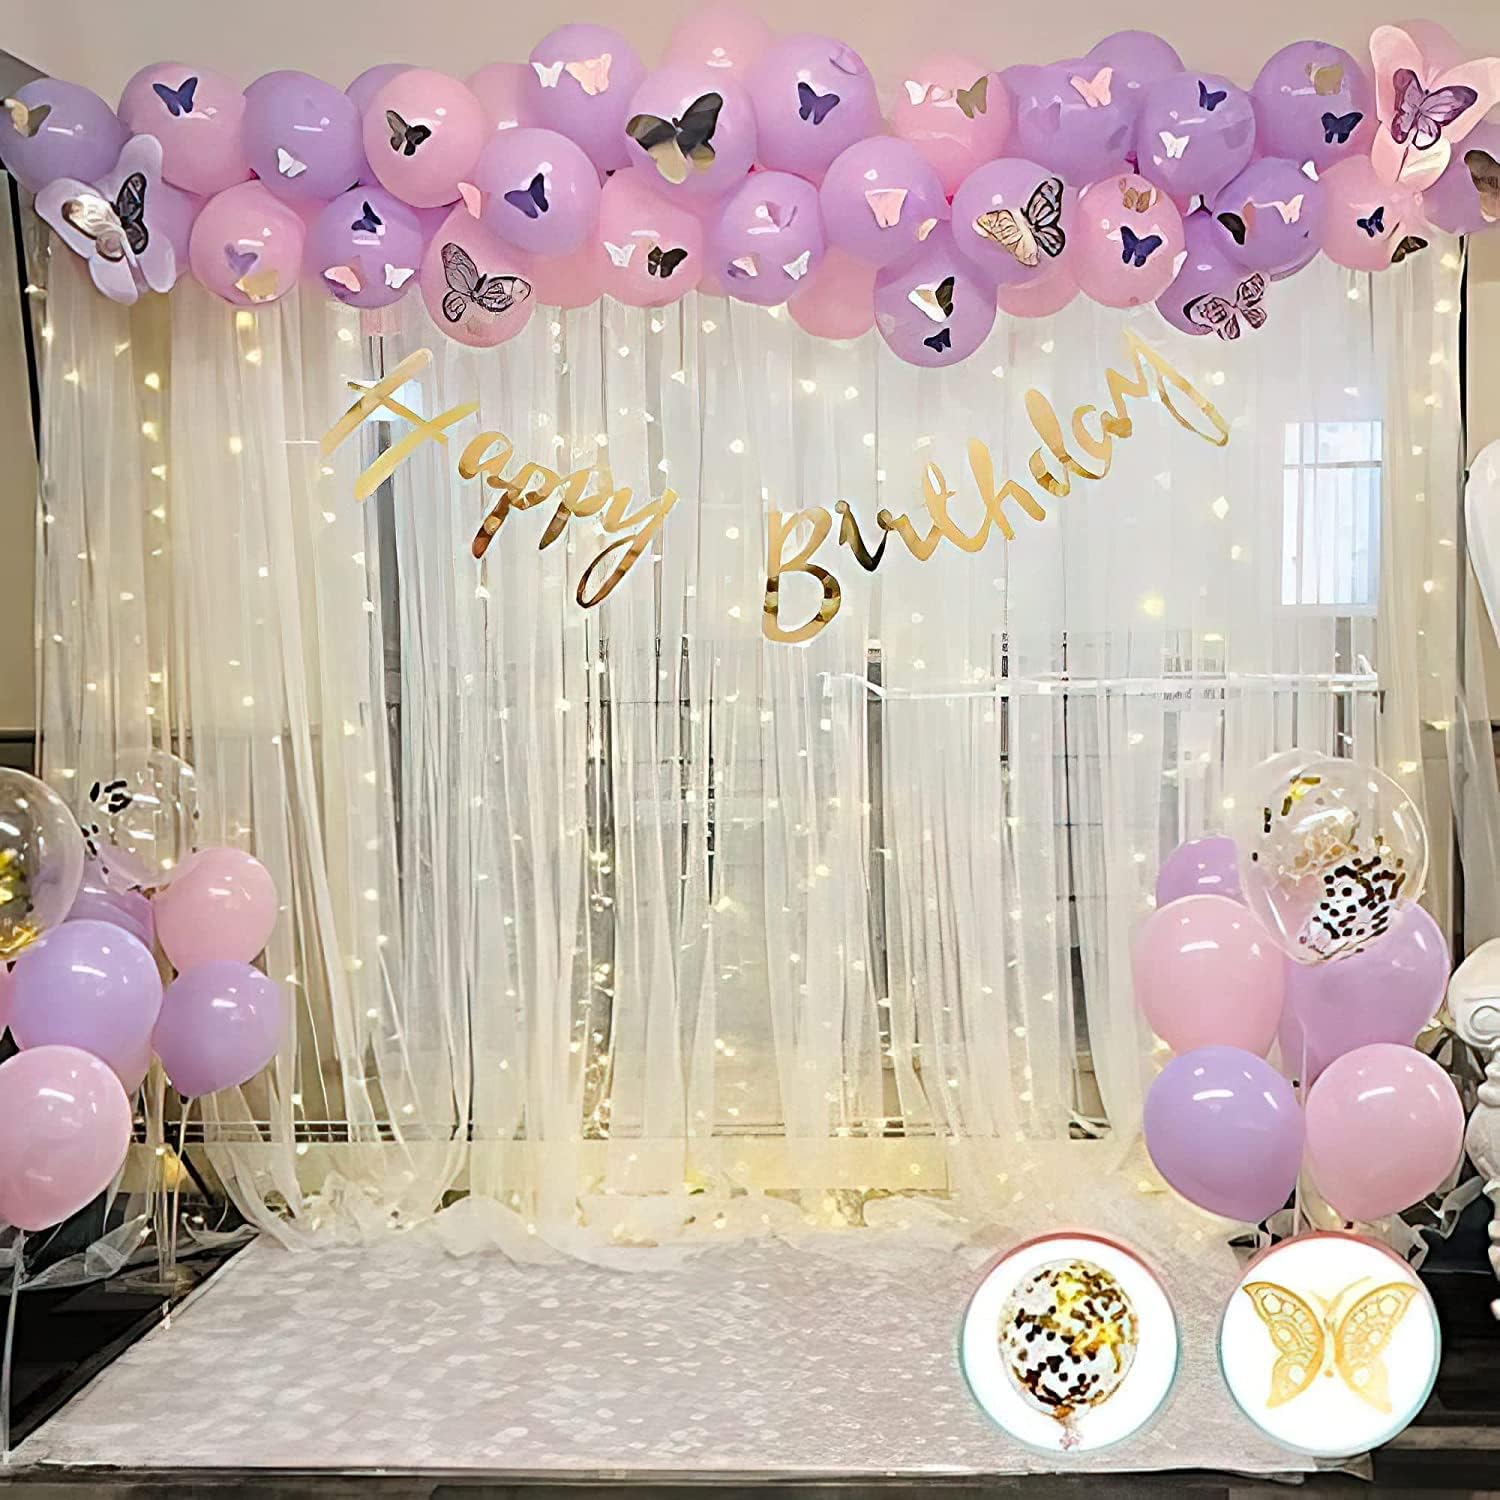 Pink and purple balloons birthday decoration